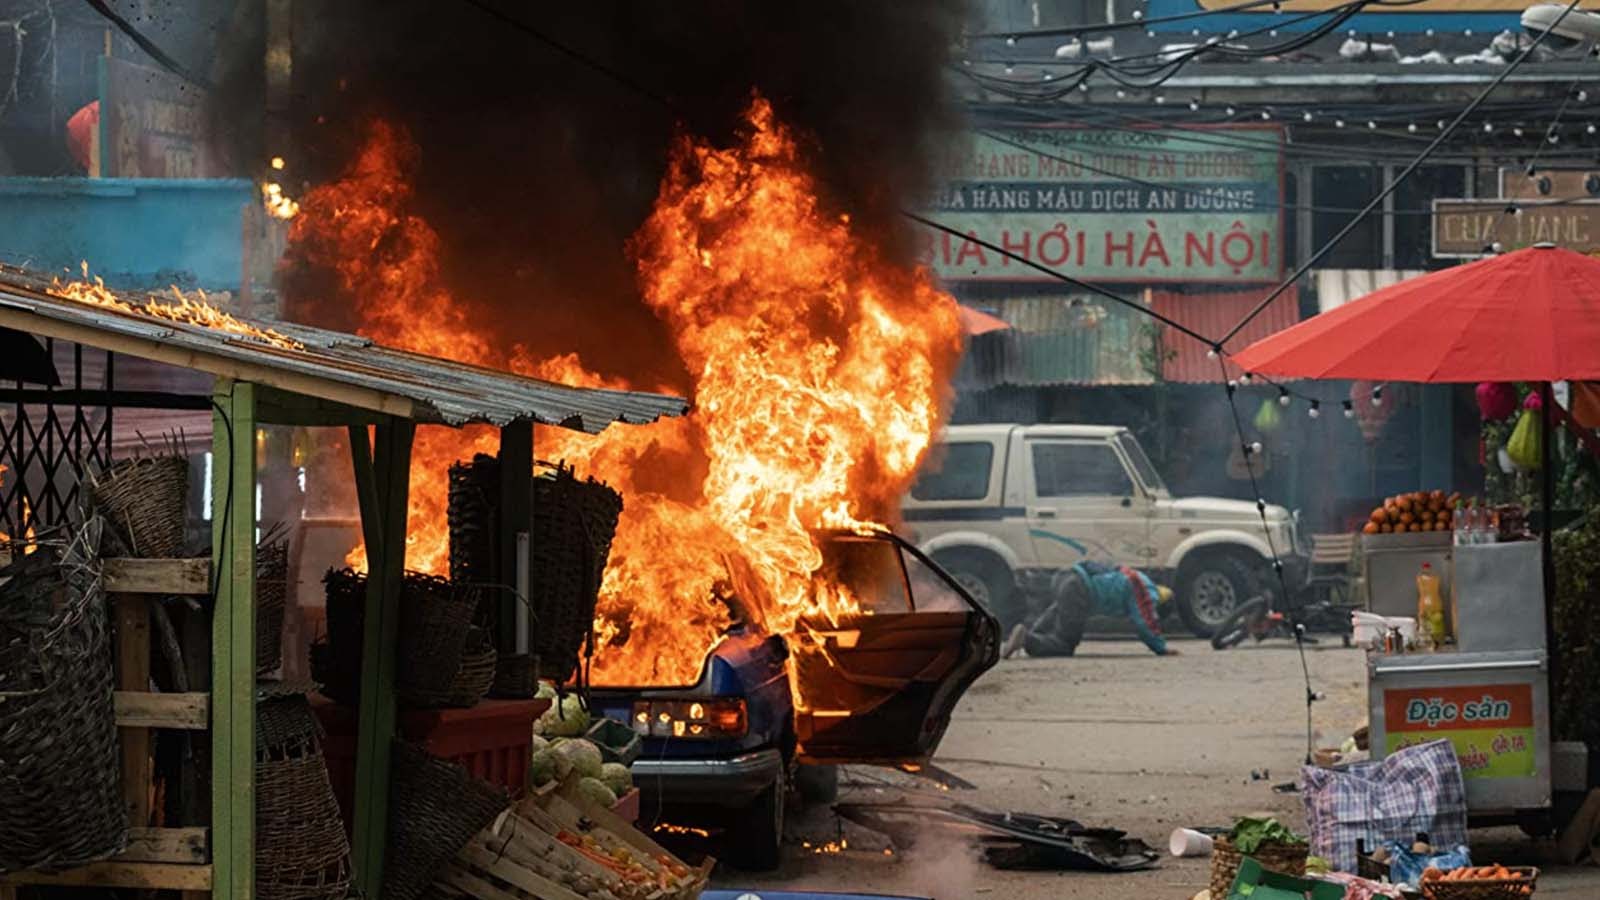 Pyrotechnics on the streets of Da Nang.